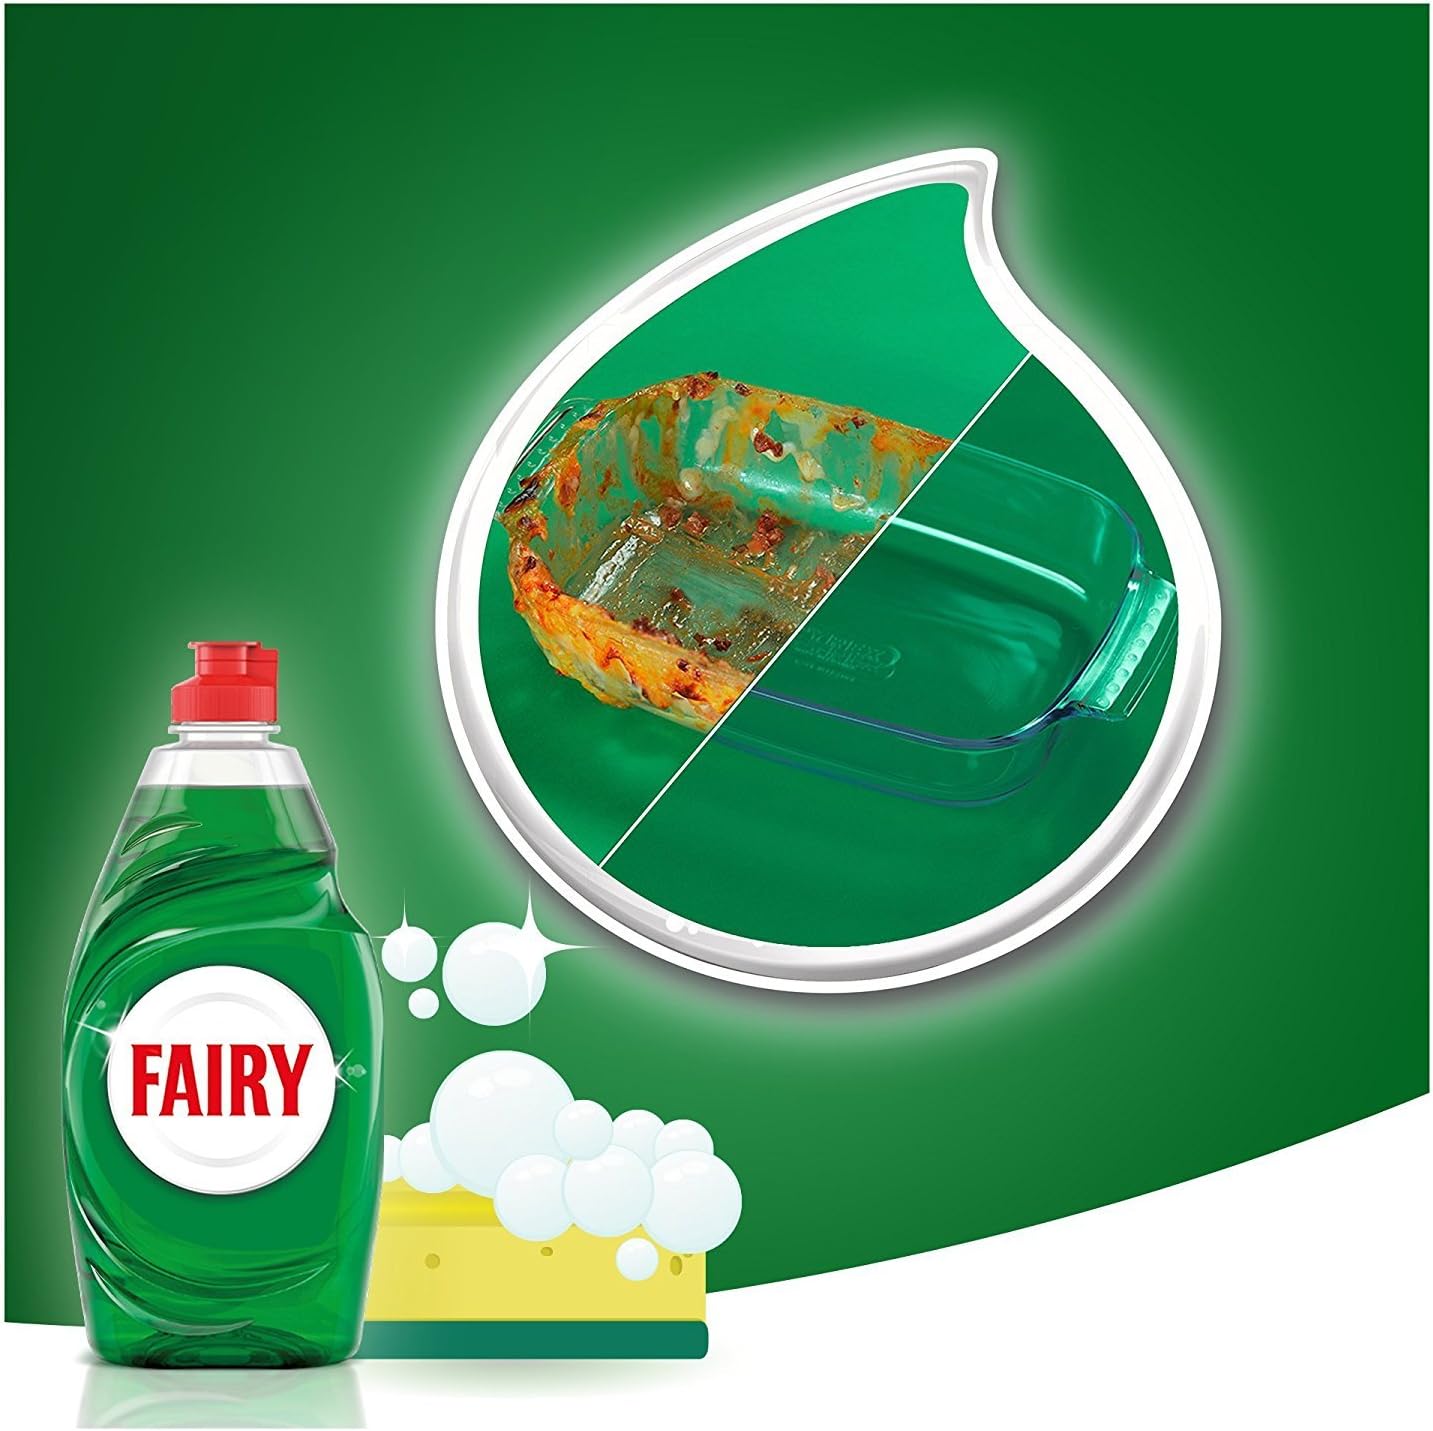 Fairy Original Liquid, 433 ml : Health & Household